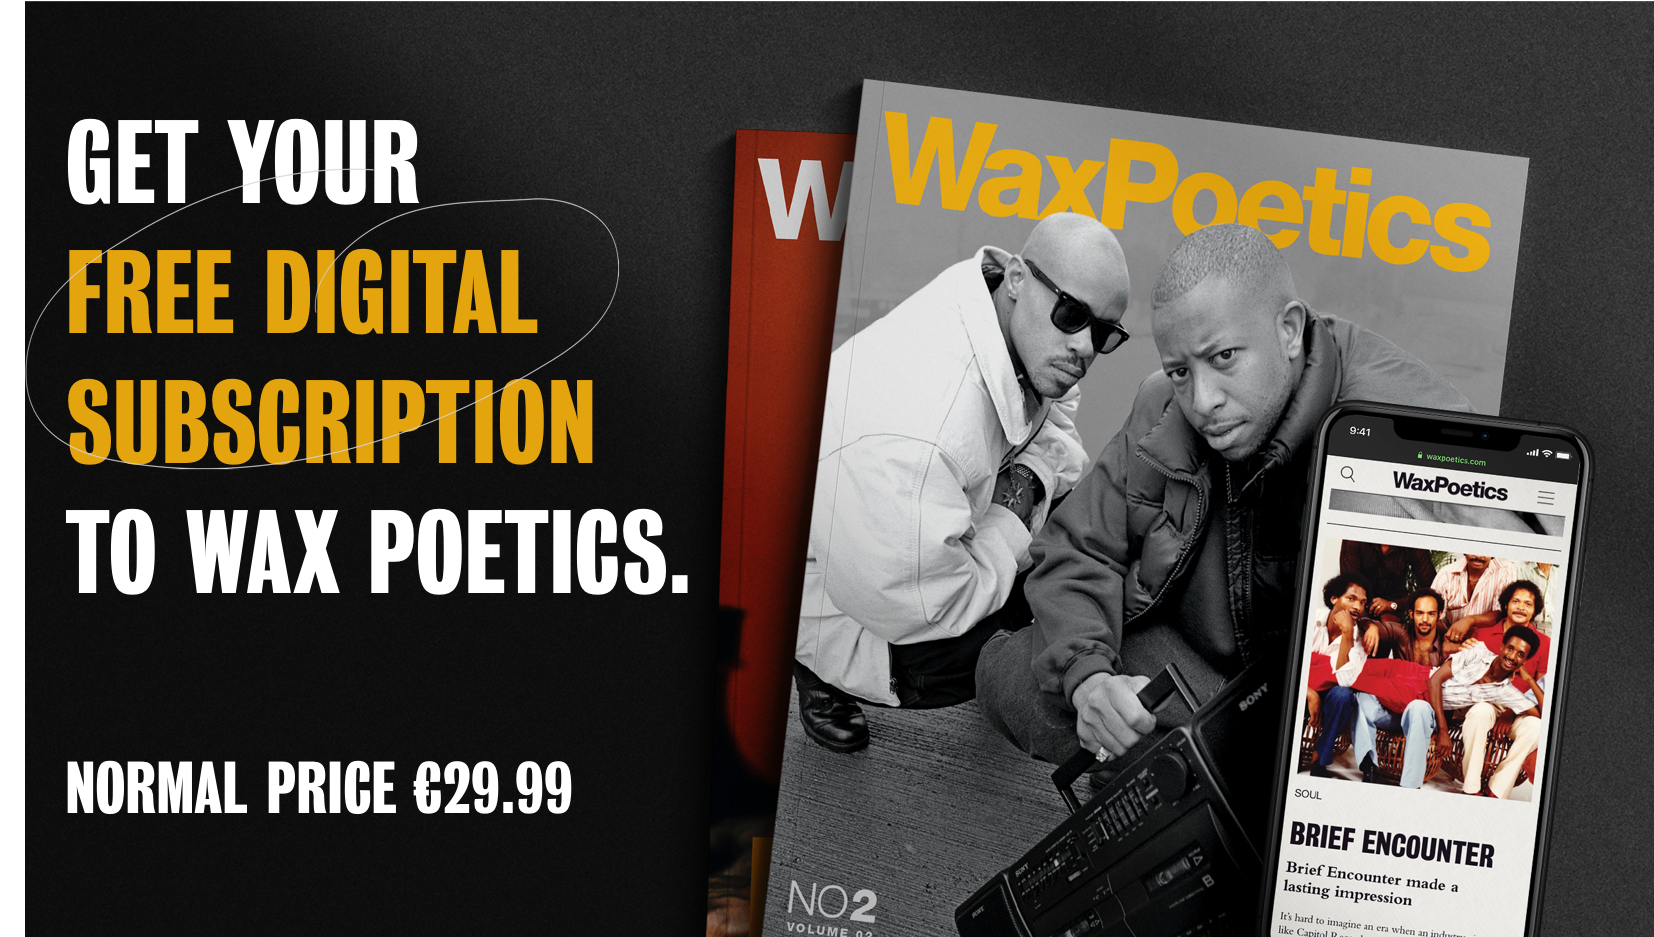 Get a free one-year digital subscription to LGW media partners Wax Poetics